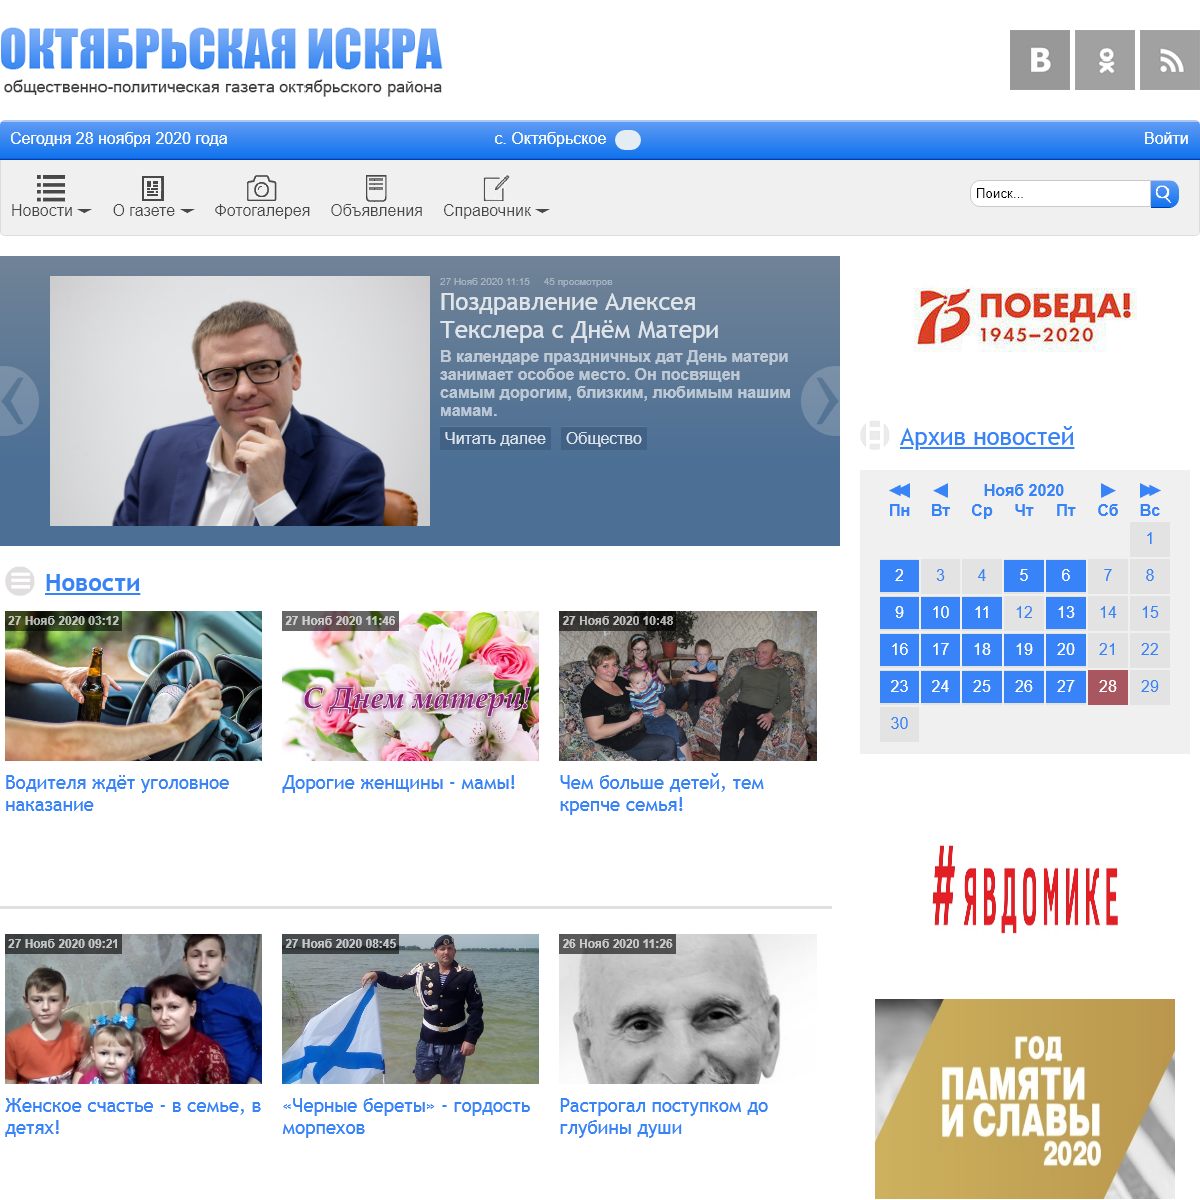 A complete backup of redakcia-oi.ru